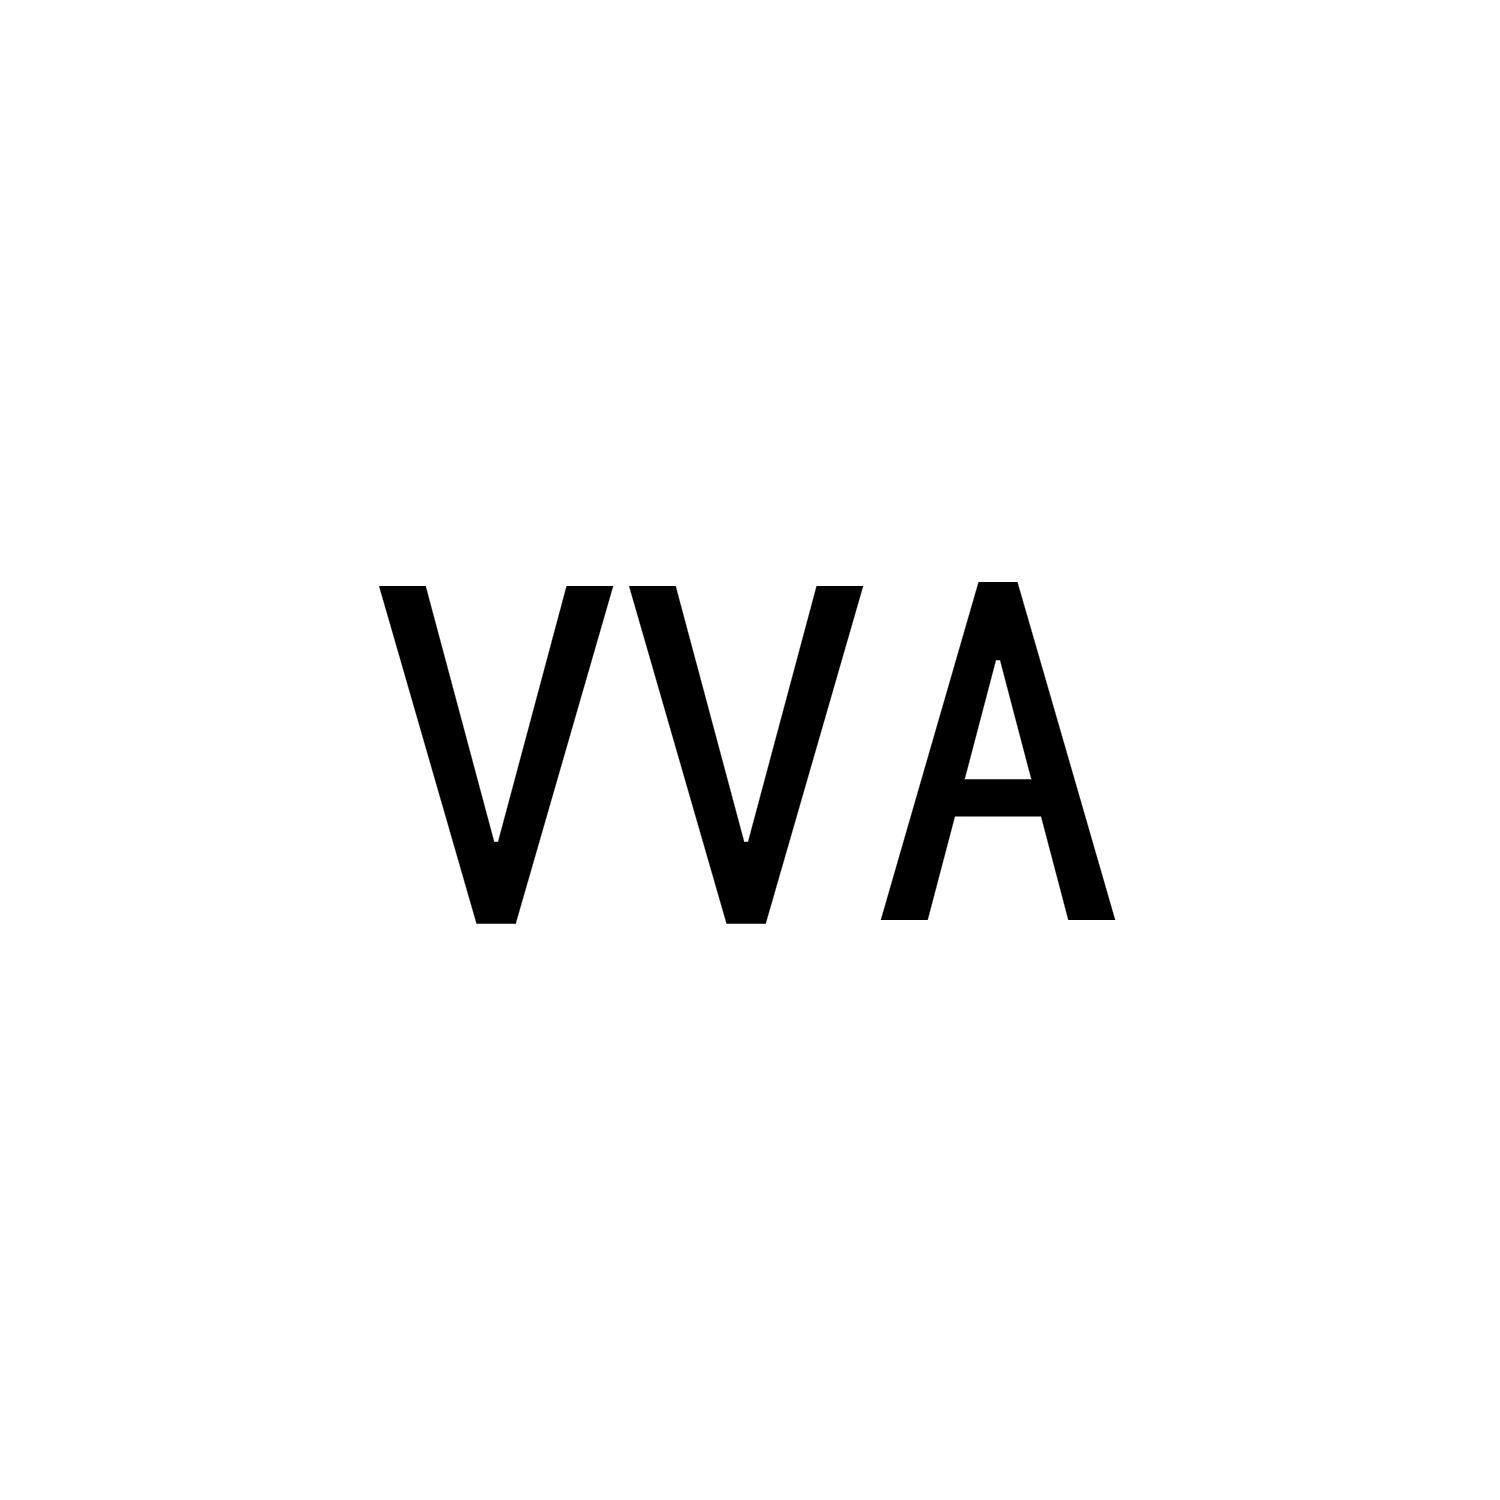 VVA商标转让